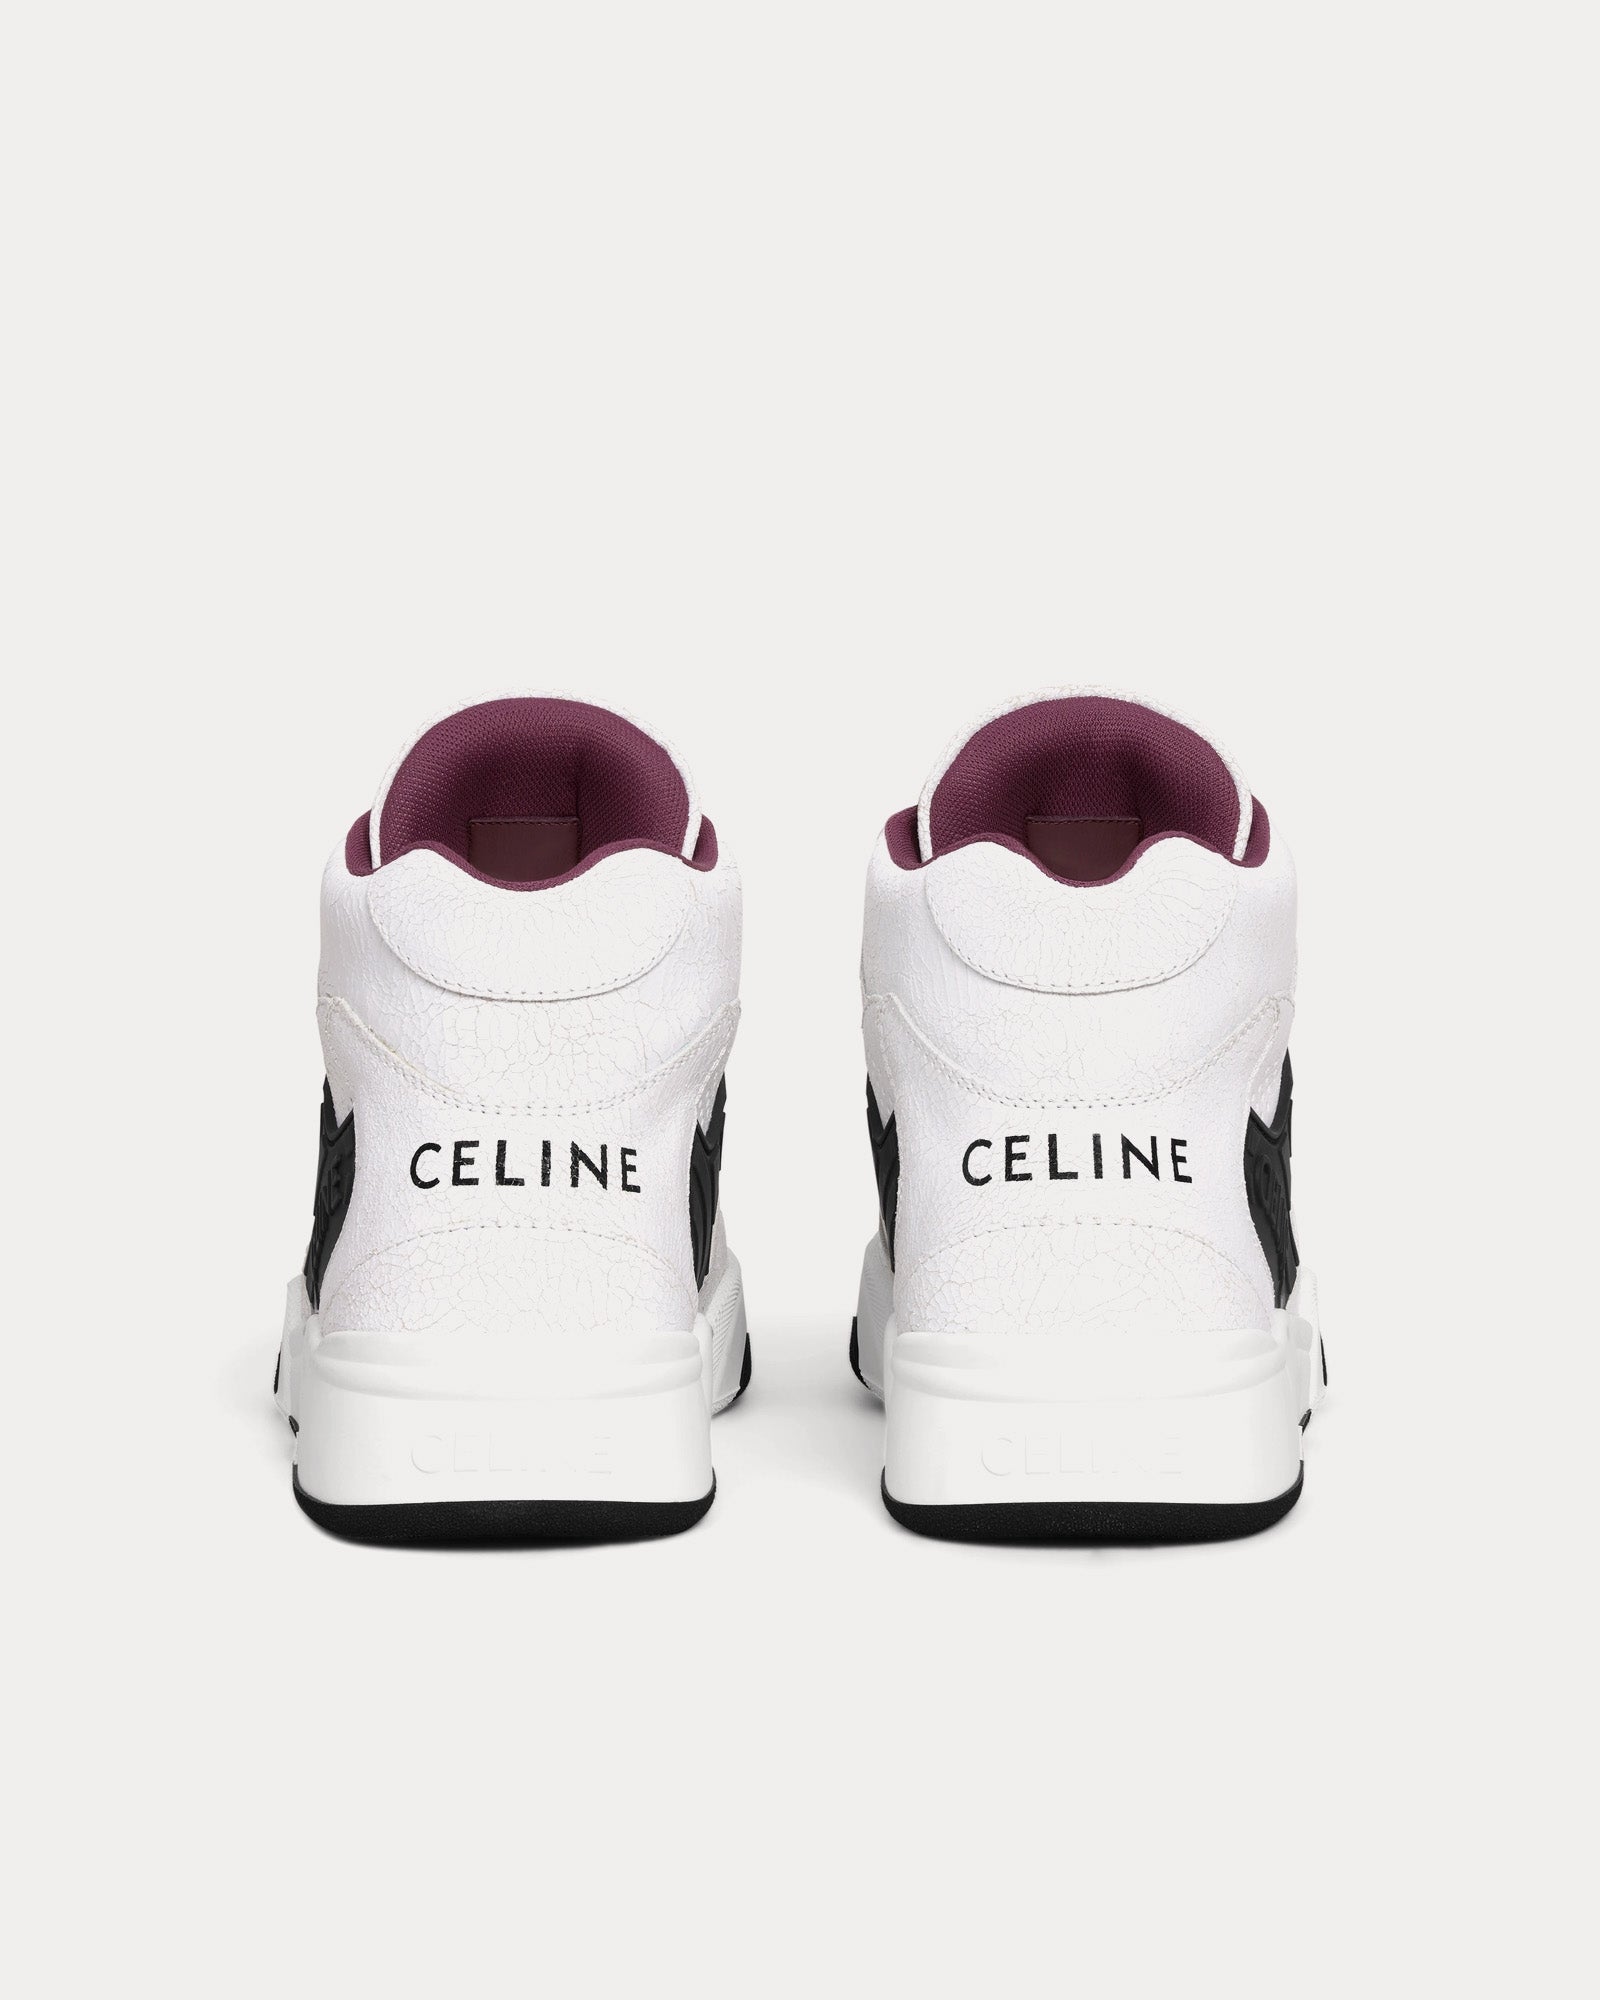 Celine - CT-06 Crackled Calfskin & Suede White / Black / Purple High Top Sneakers